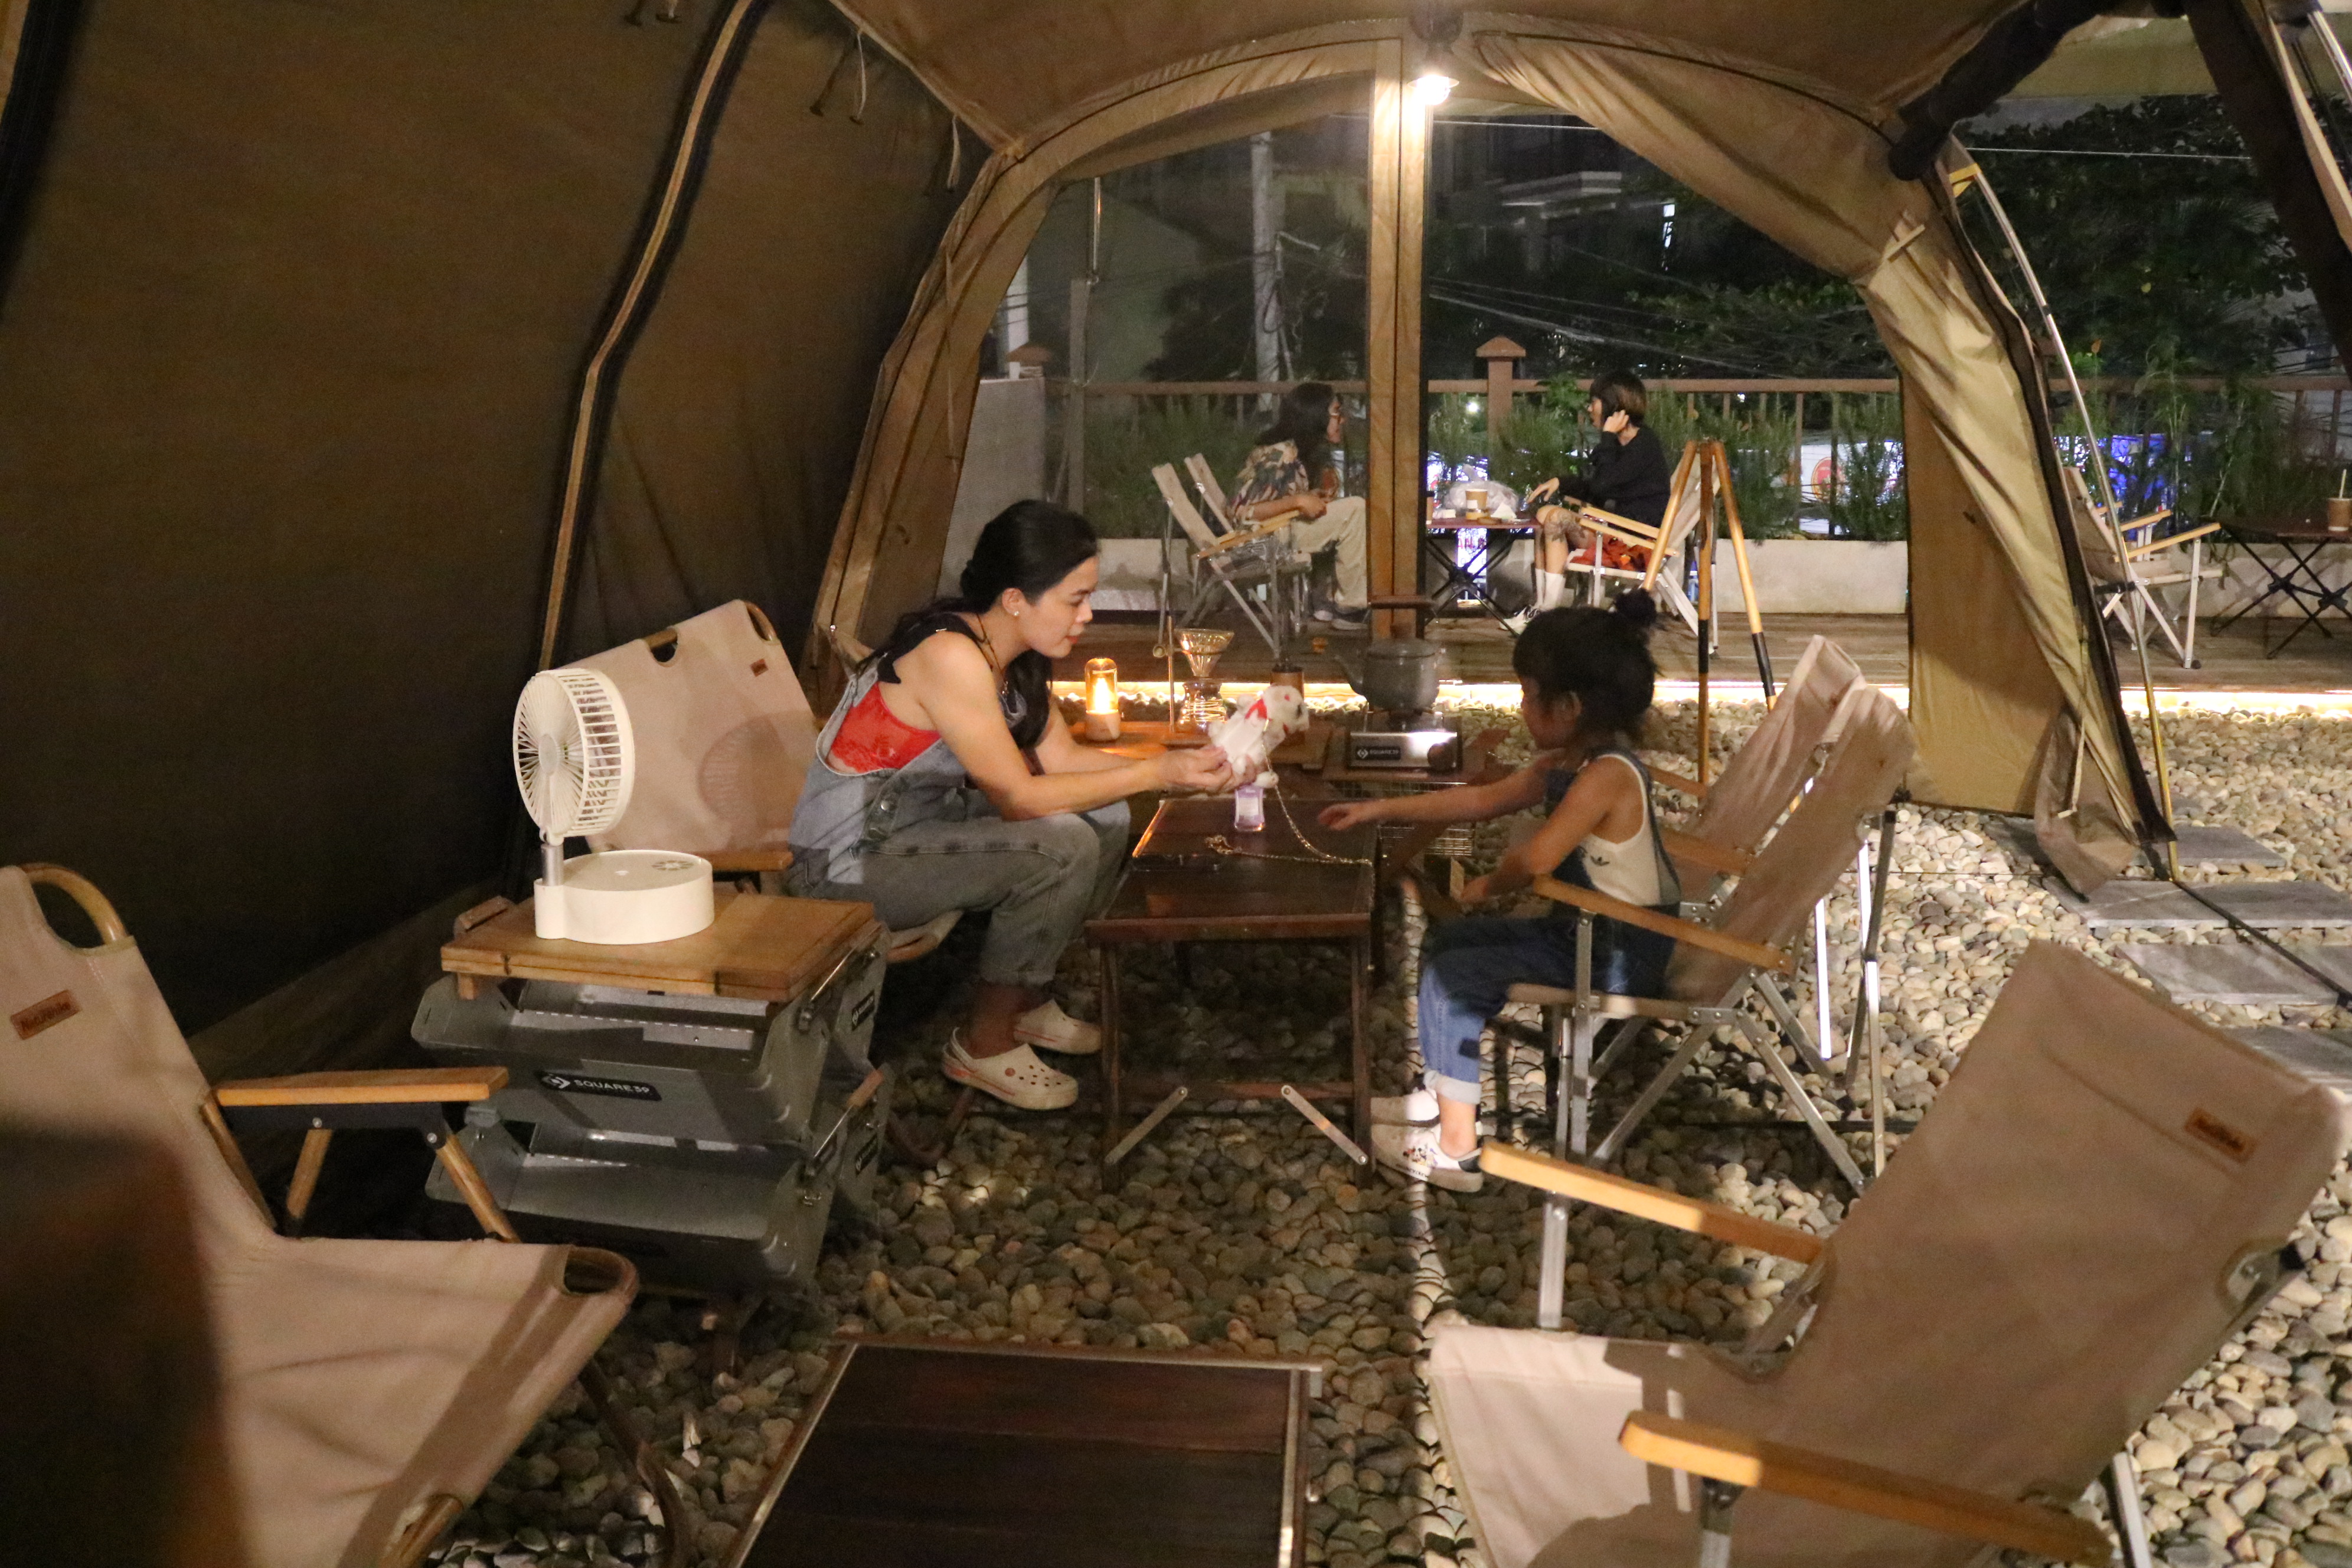 Ho Chi Minh City café brings chill camping vibes